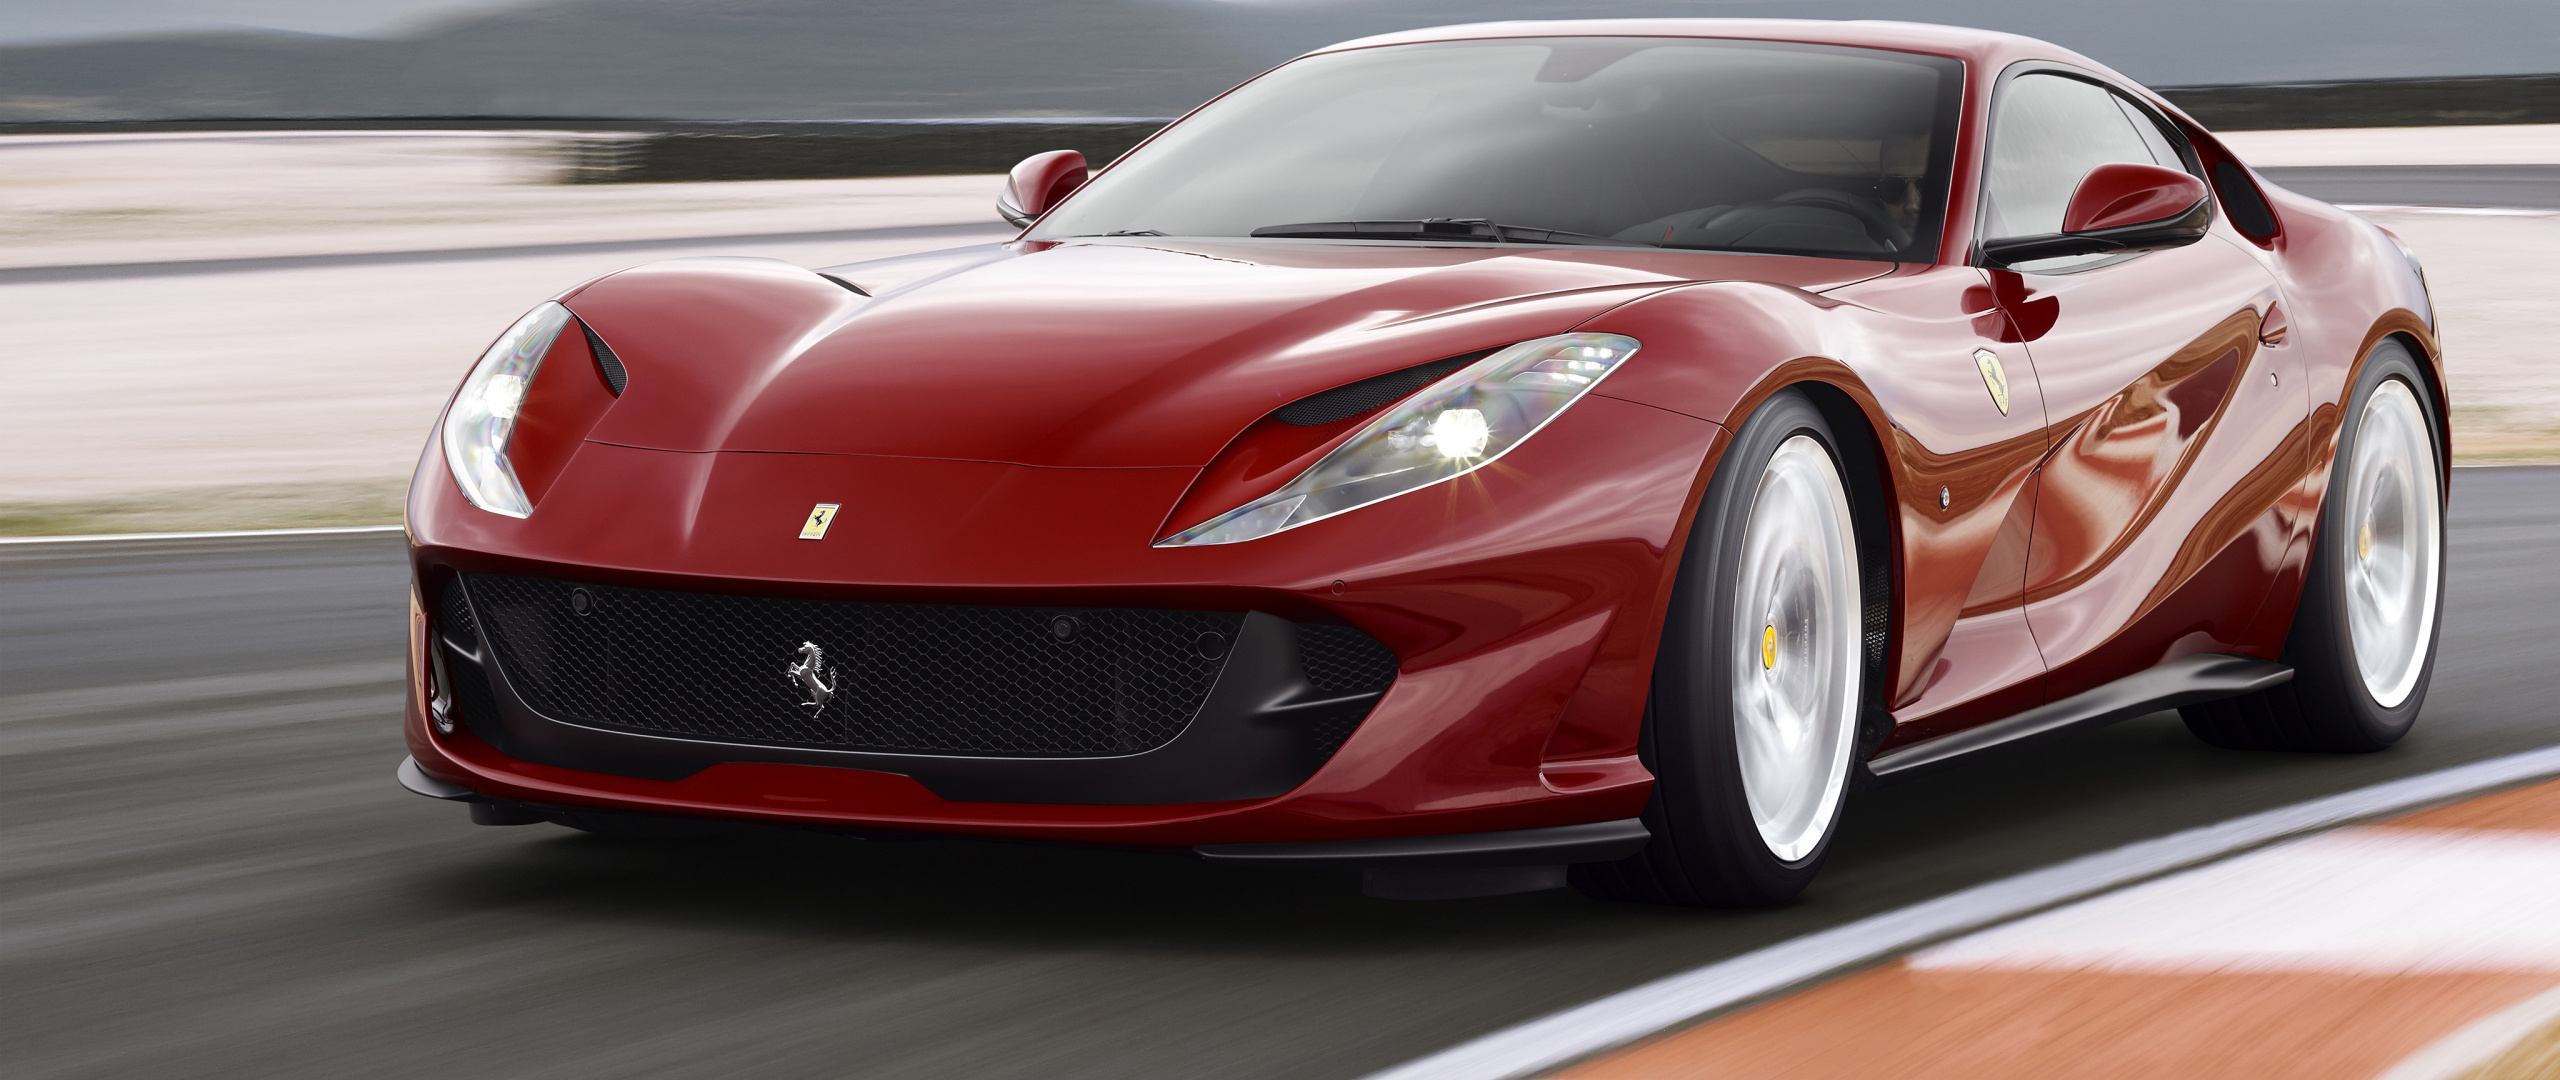 Ferrari 812 Superfast, Red sports car, Dual wide HD image, Background, 2560x1080 Dual Screen Desktop